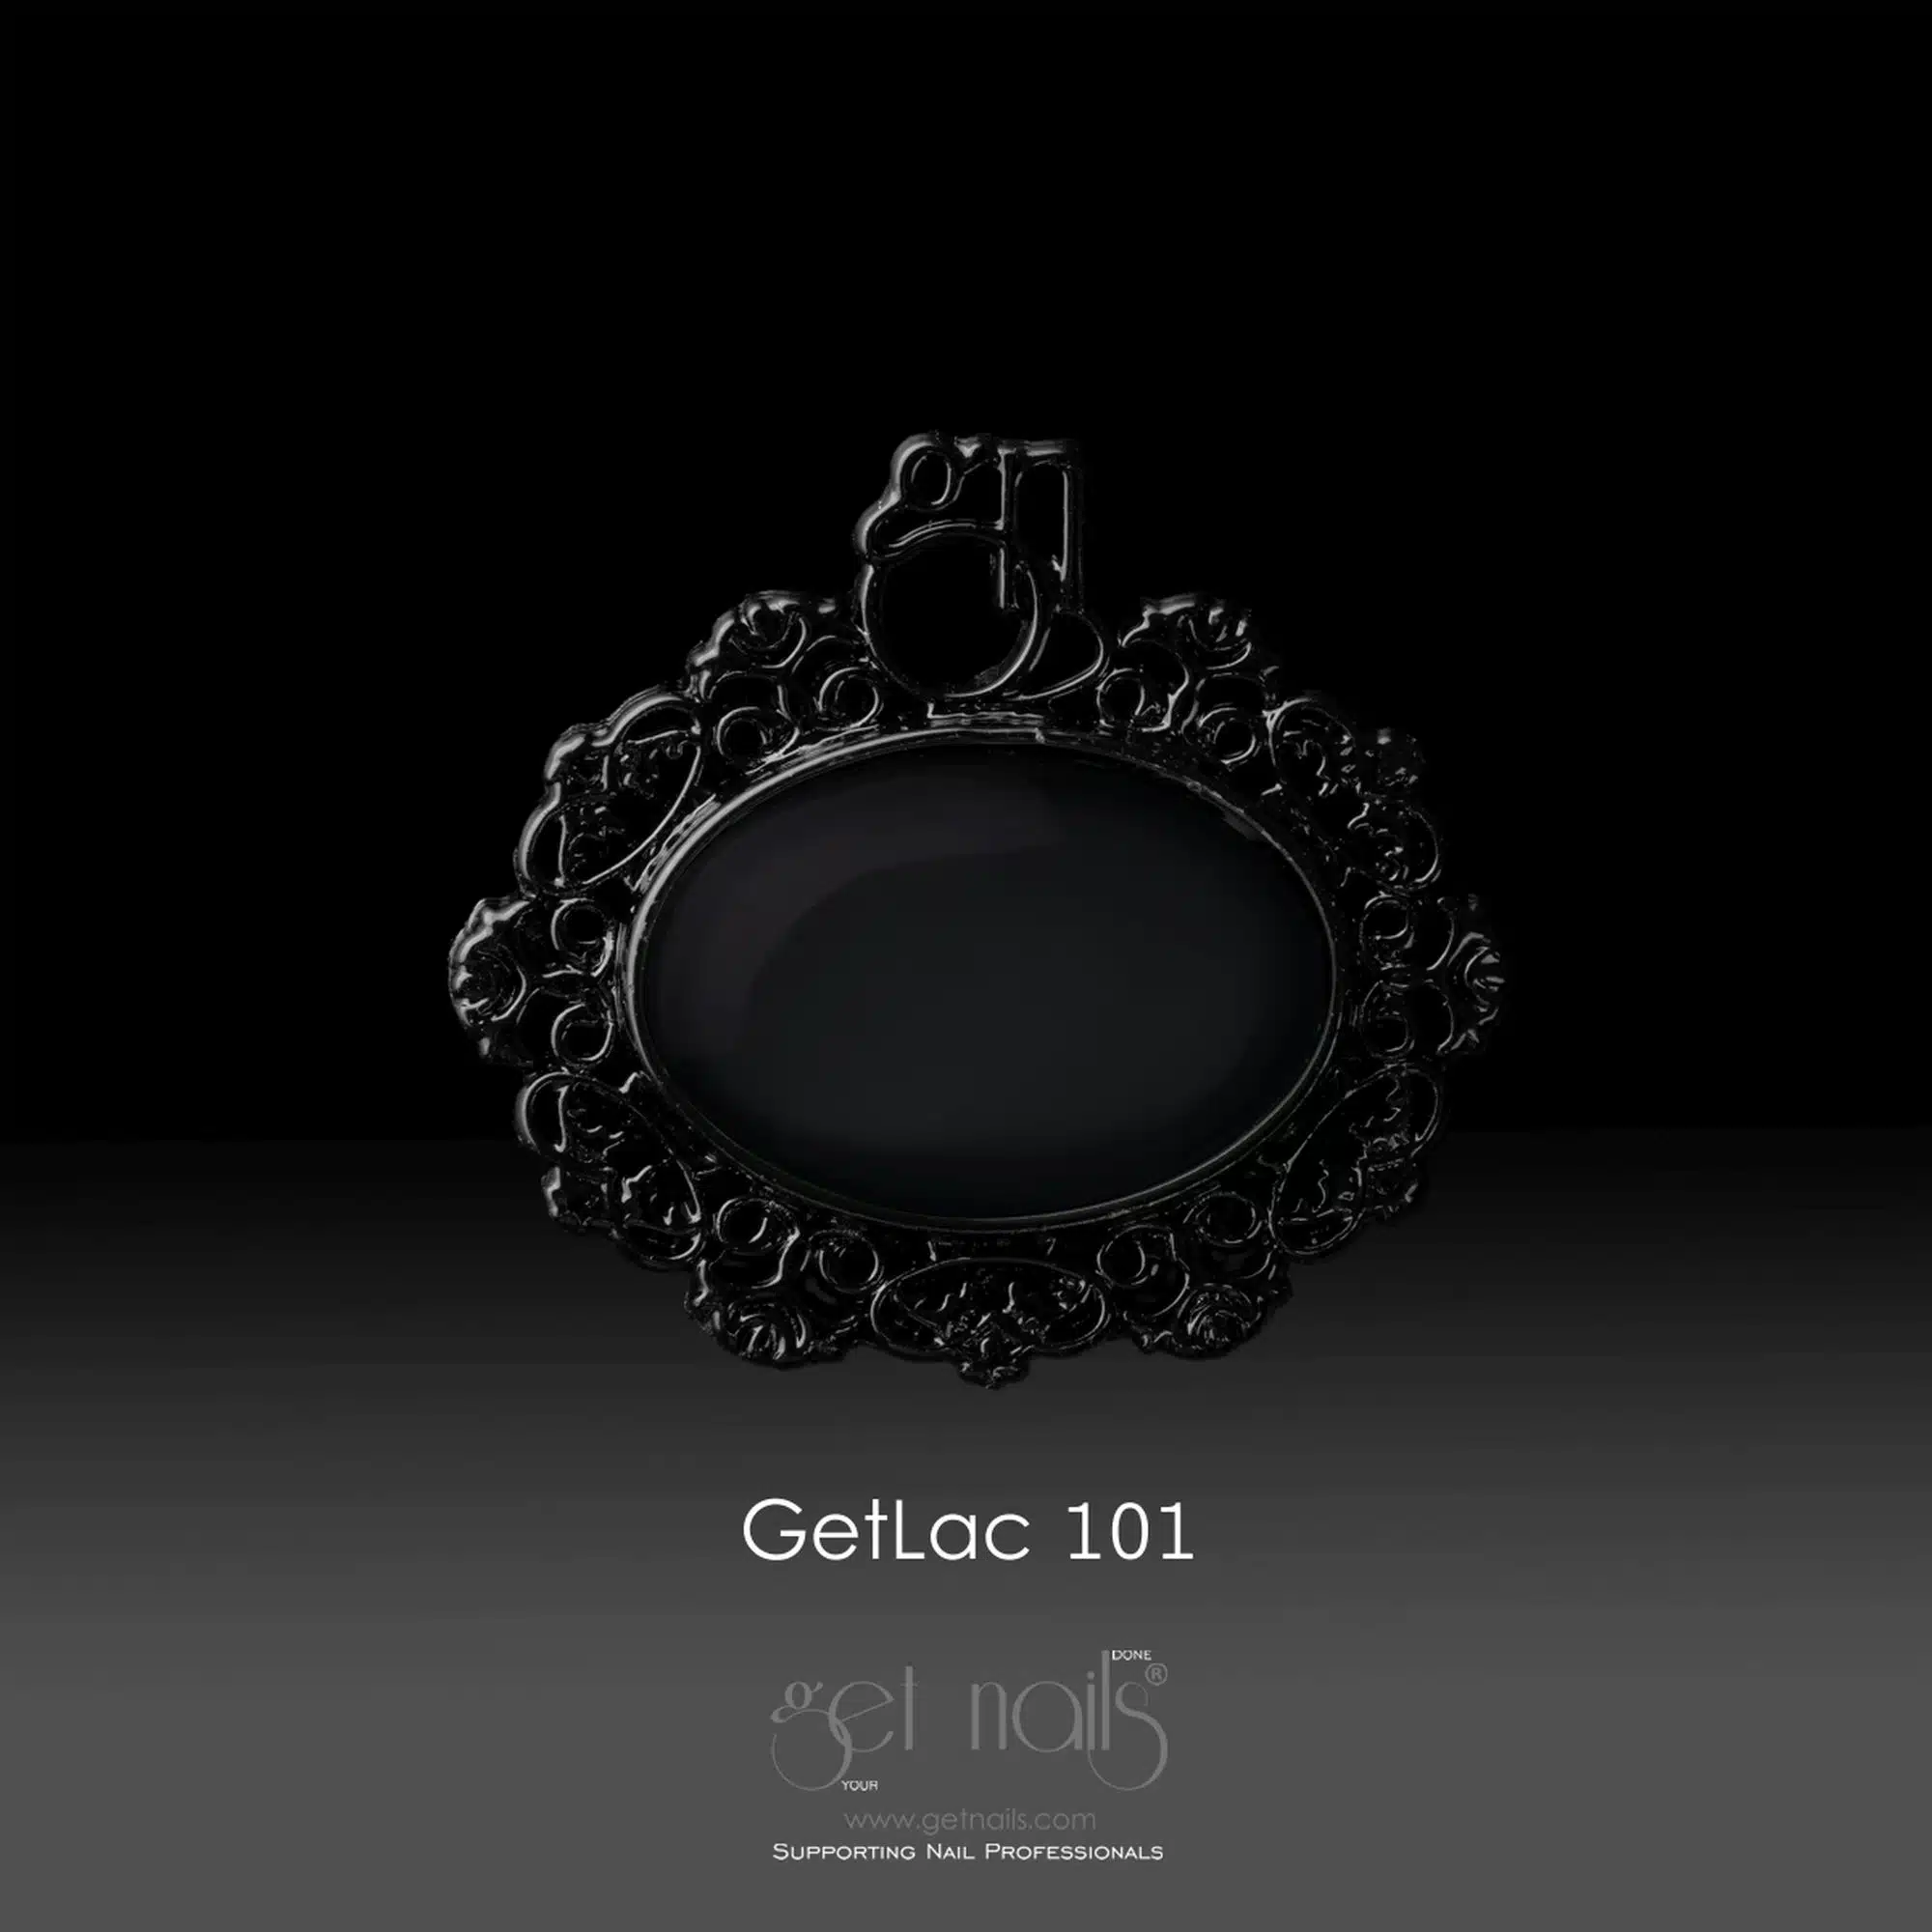 Get Nails Austria - GetLac 101 Nero 15g